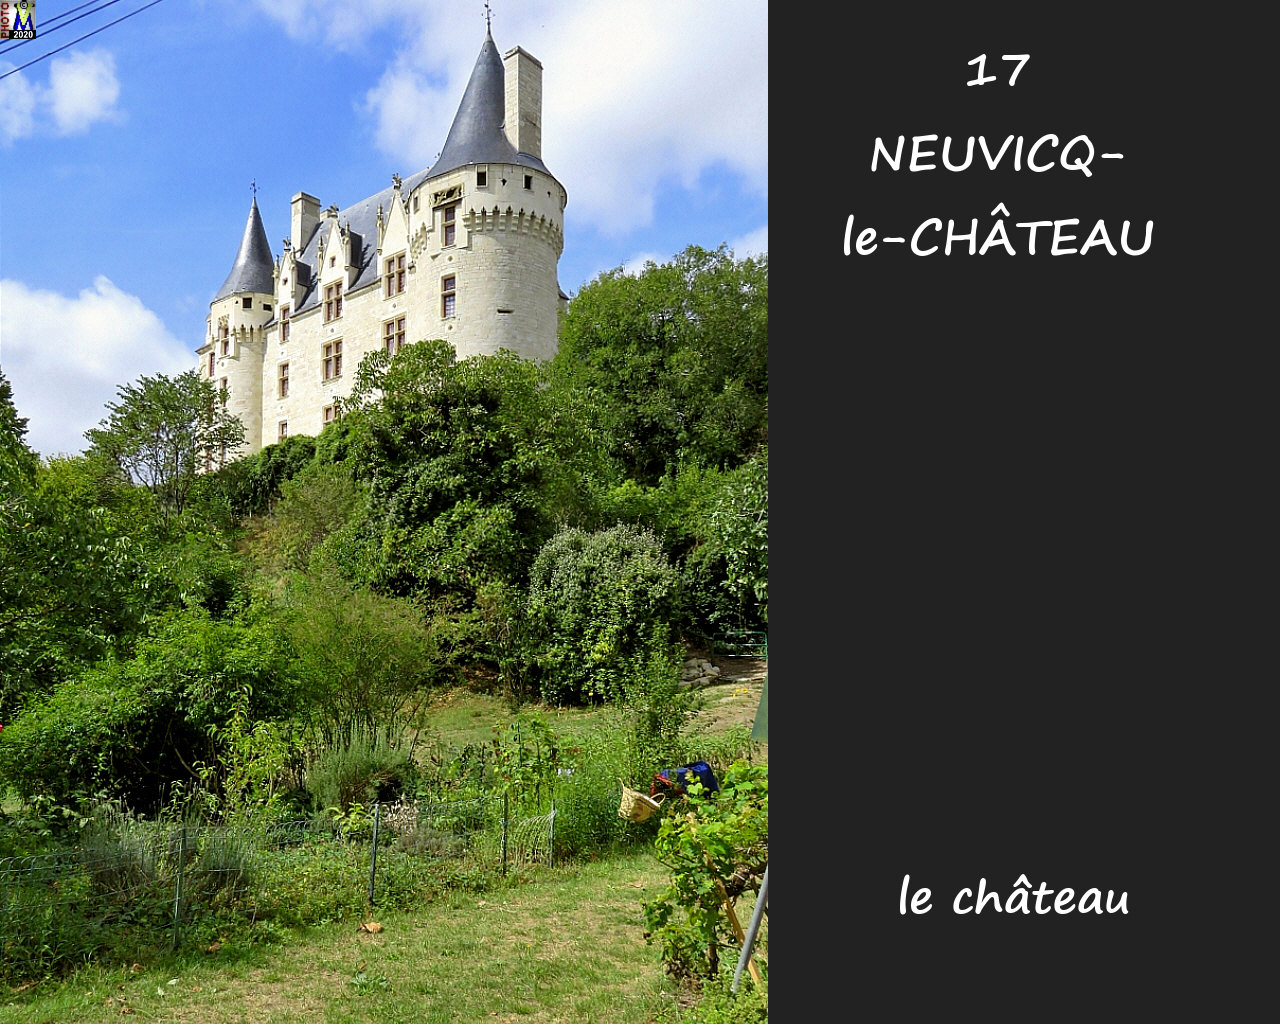 17NEUVICQ-CHATEAU_chateau_1002.jpg